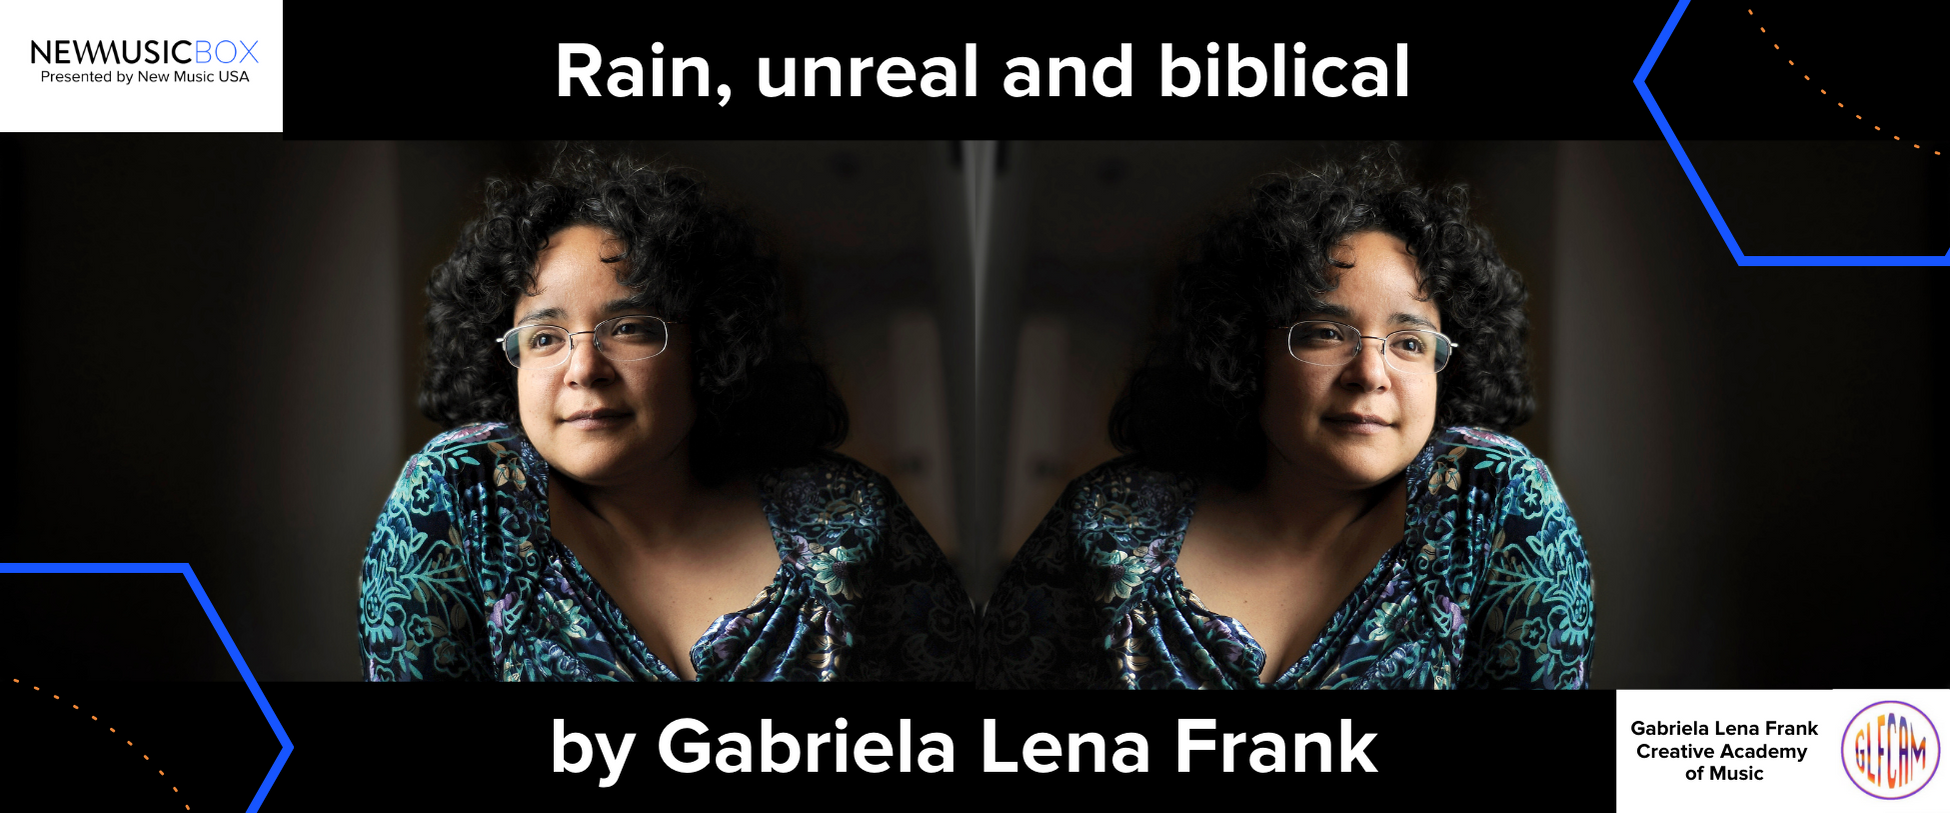 Images of Gabriela Lena Frank with GLFCAM and New Music USA logos